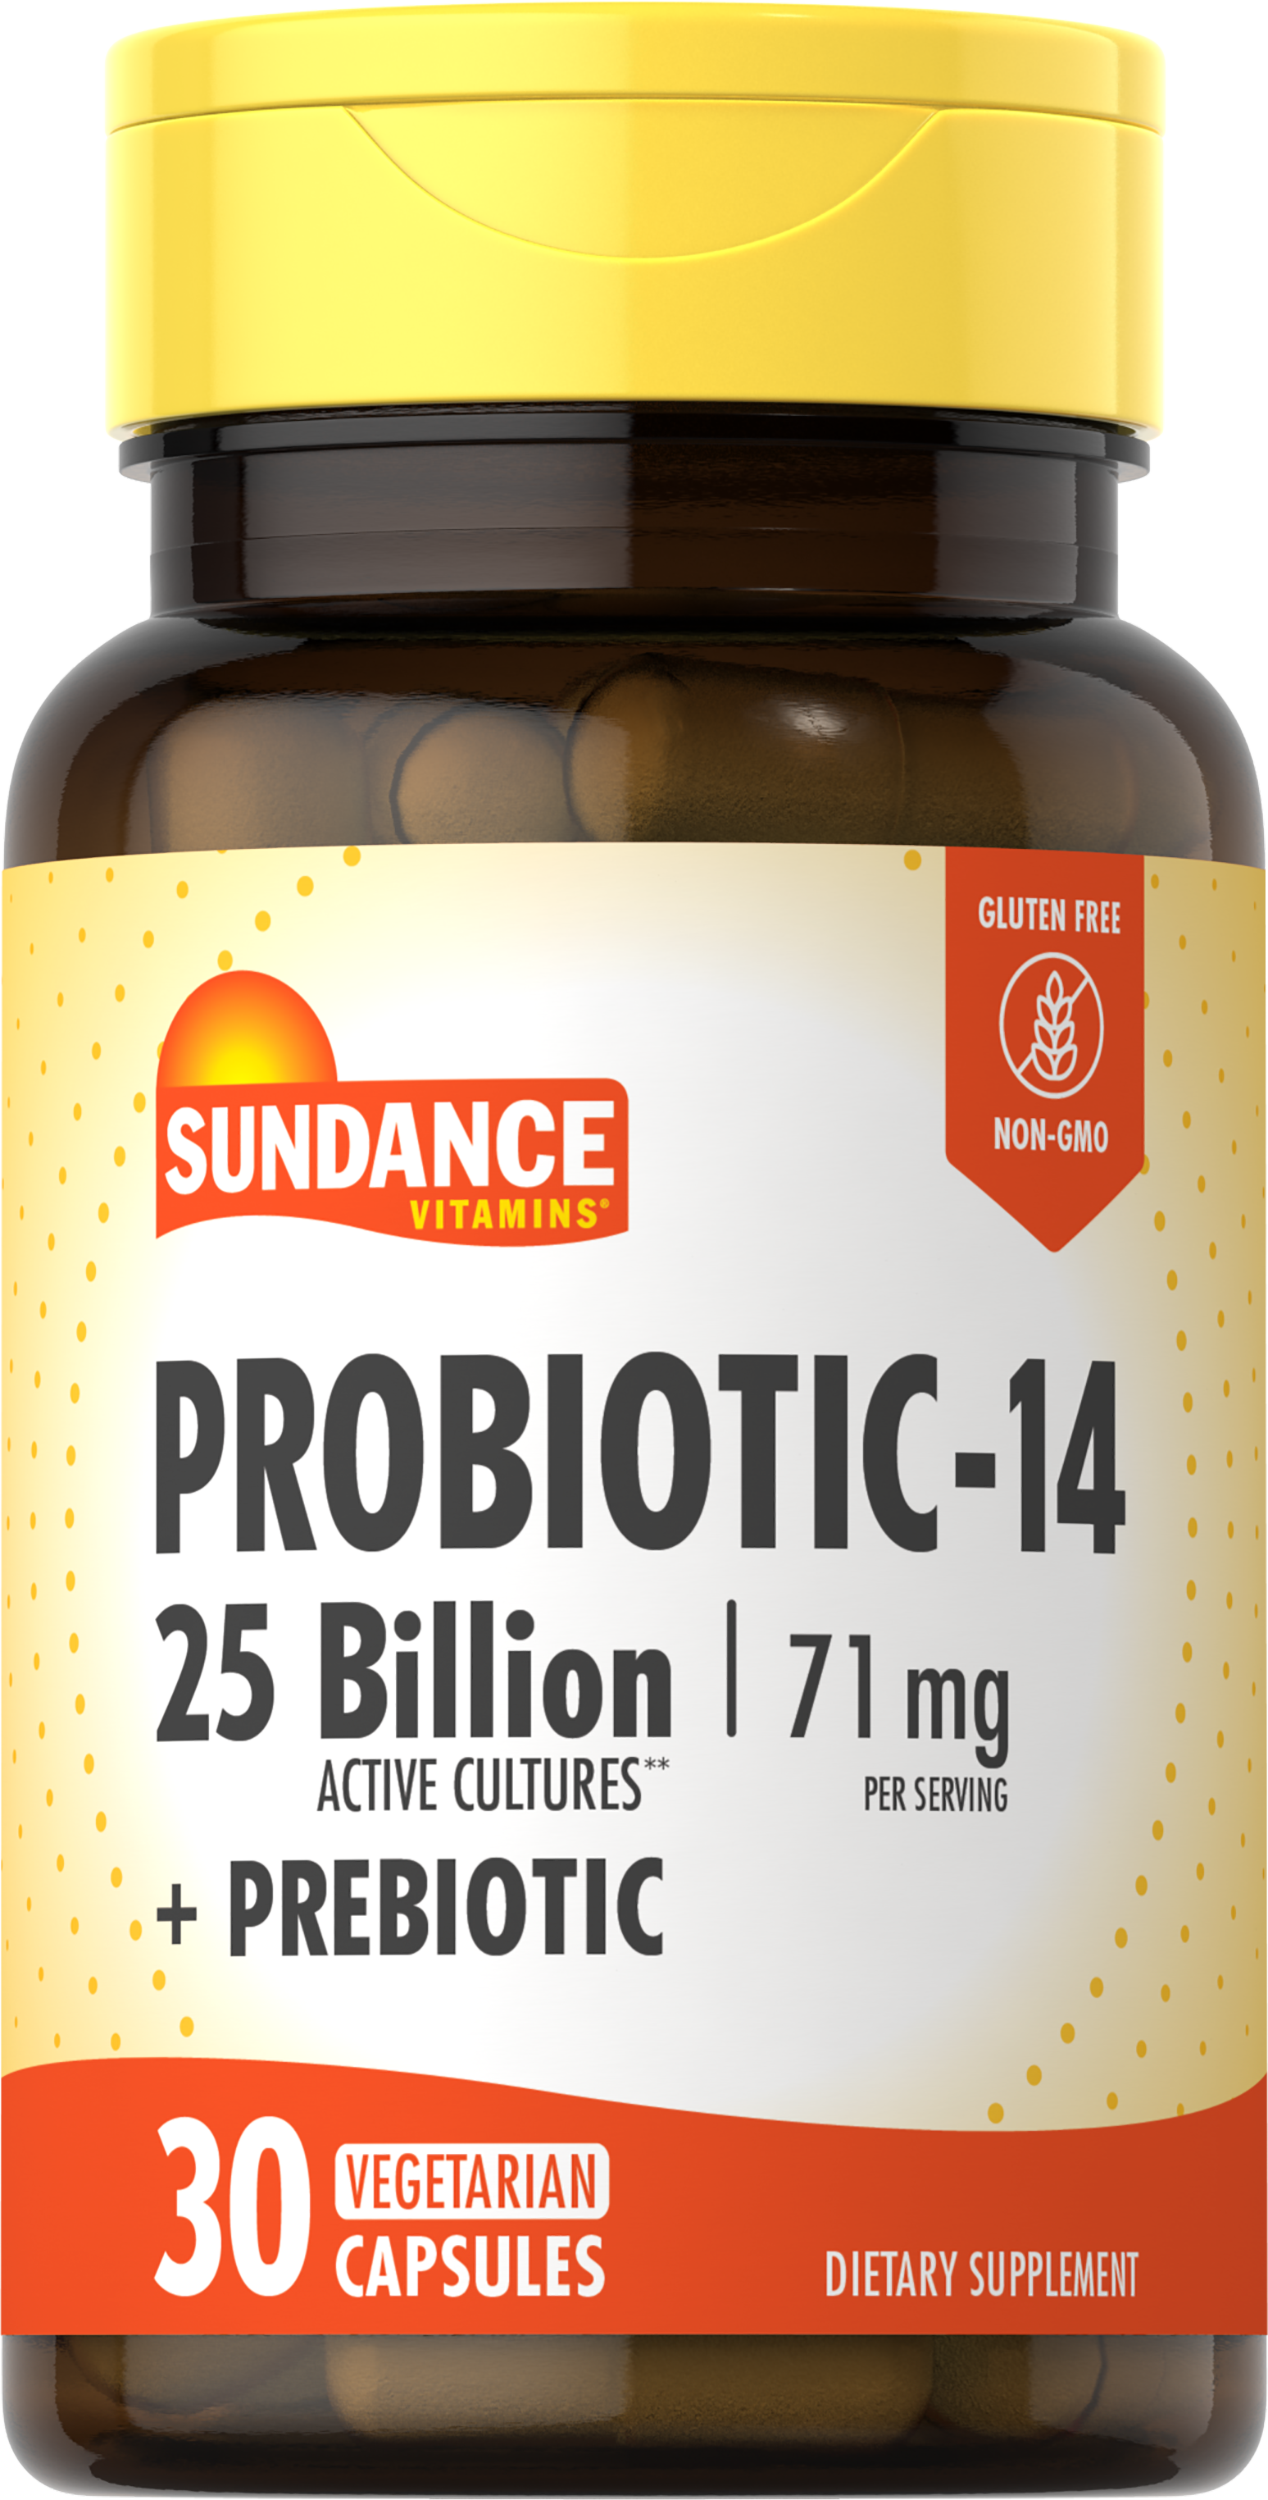 Probiotic-14 with Prebiotics 25 Billion Cultures